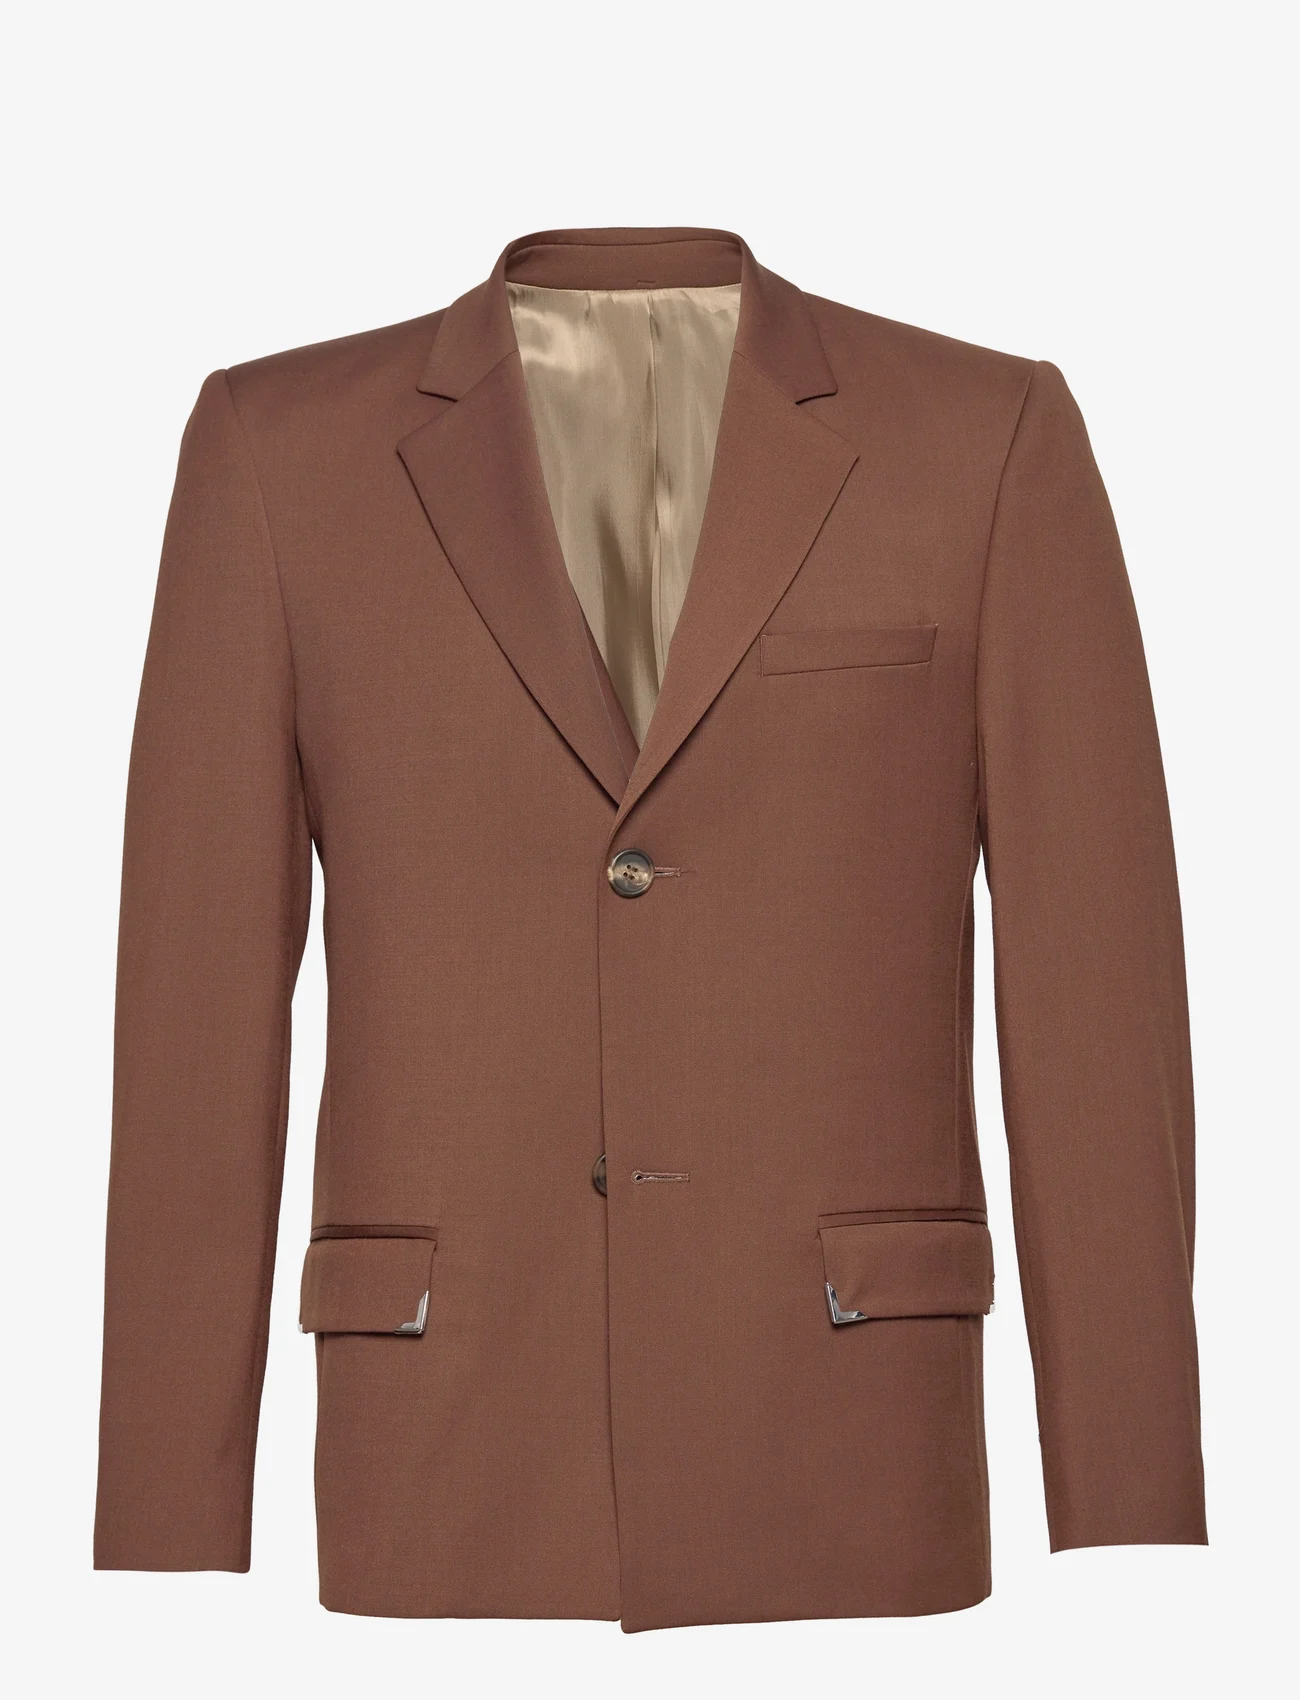 HAN Kjøbenhavn - Single Suit Blazer - zweireiher - brown - 0